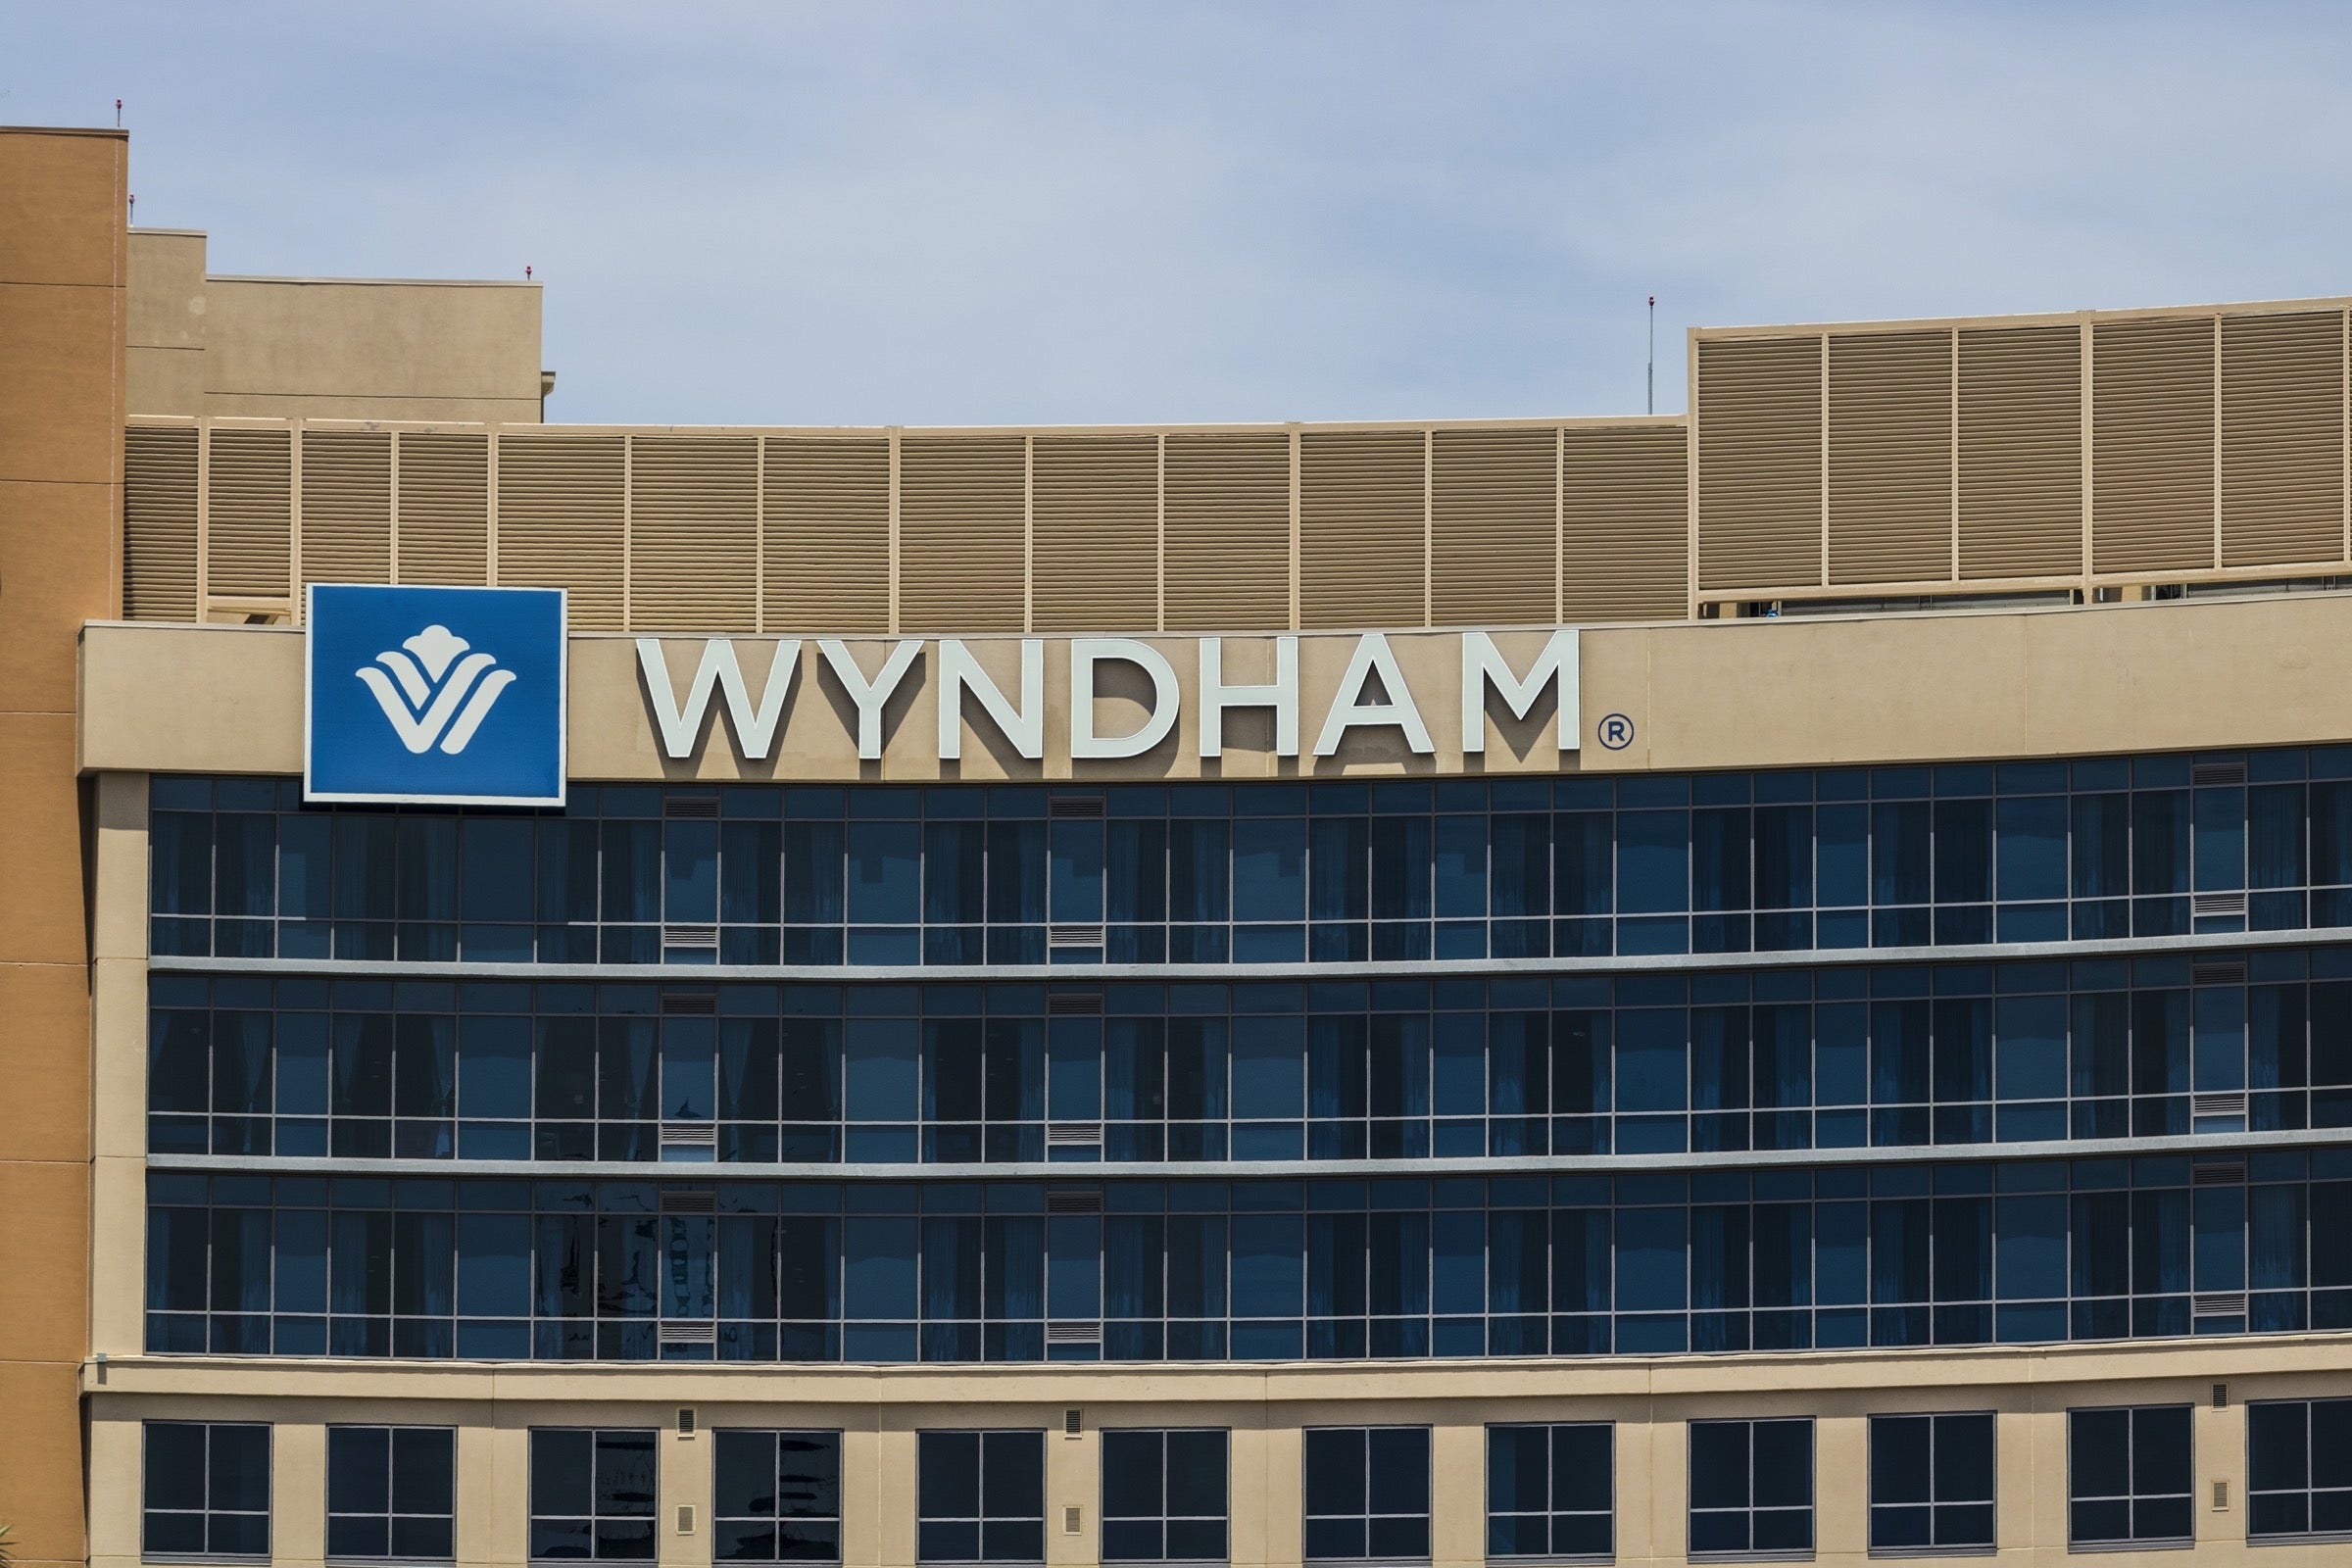 Wyndham in Las Vegas exterior